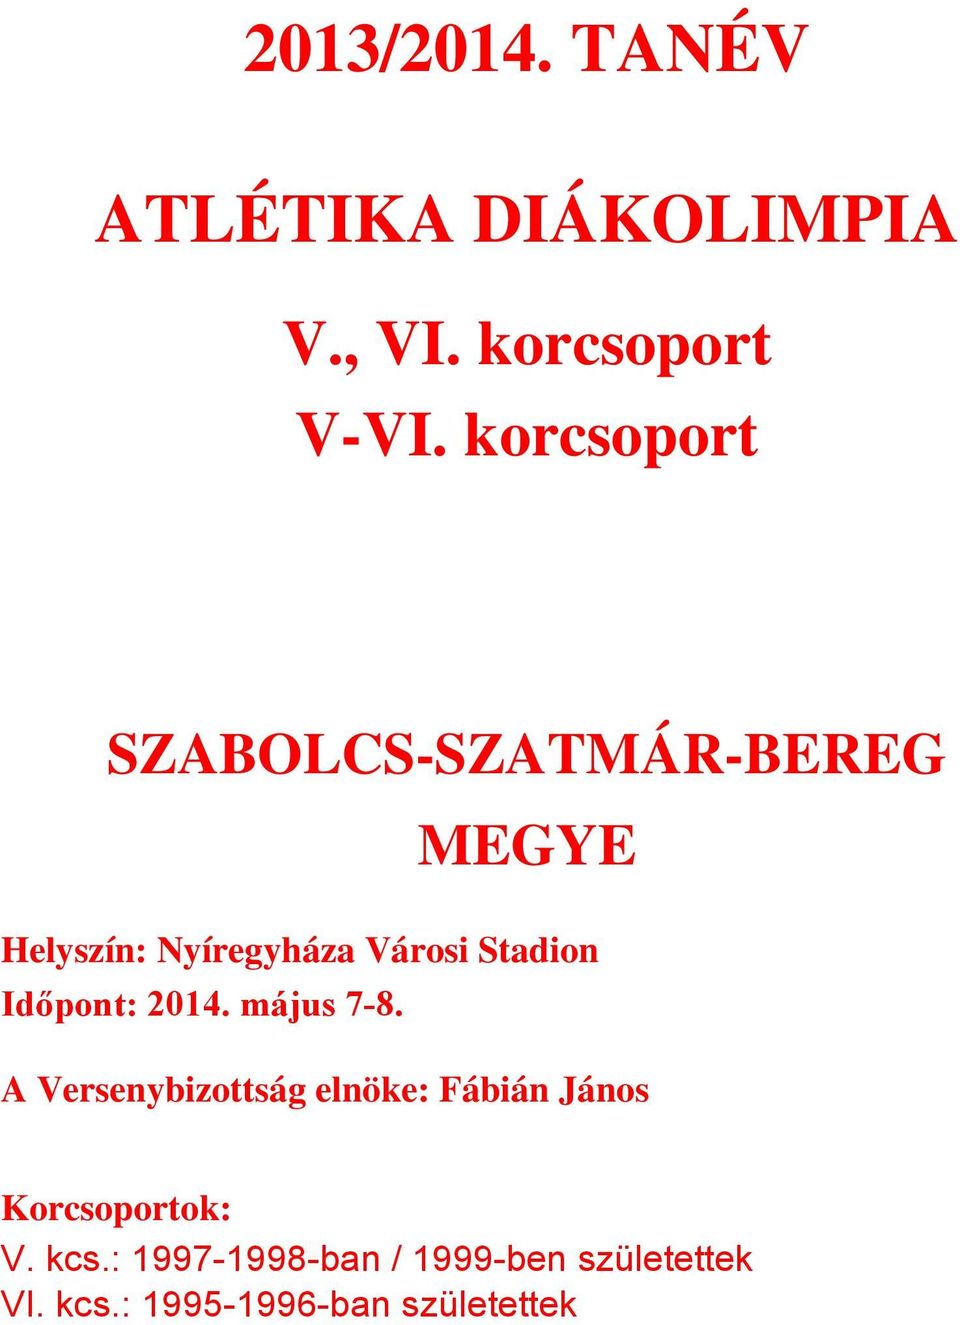 Stadion Időpont: 2014. május 7-8.